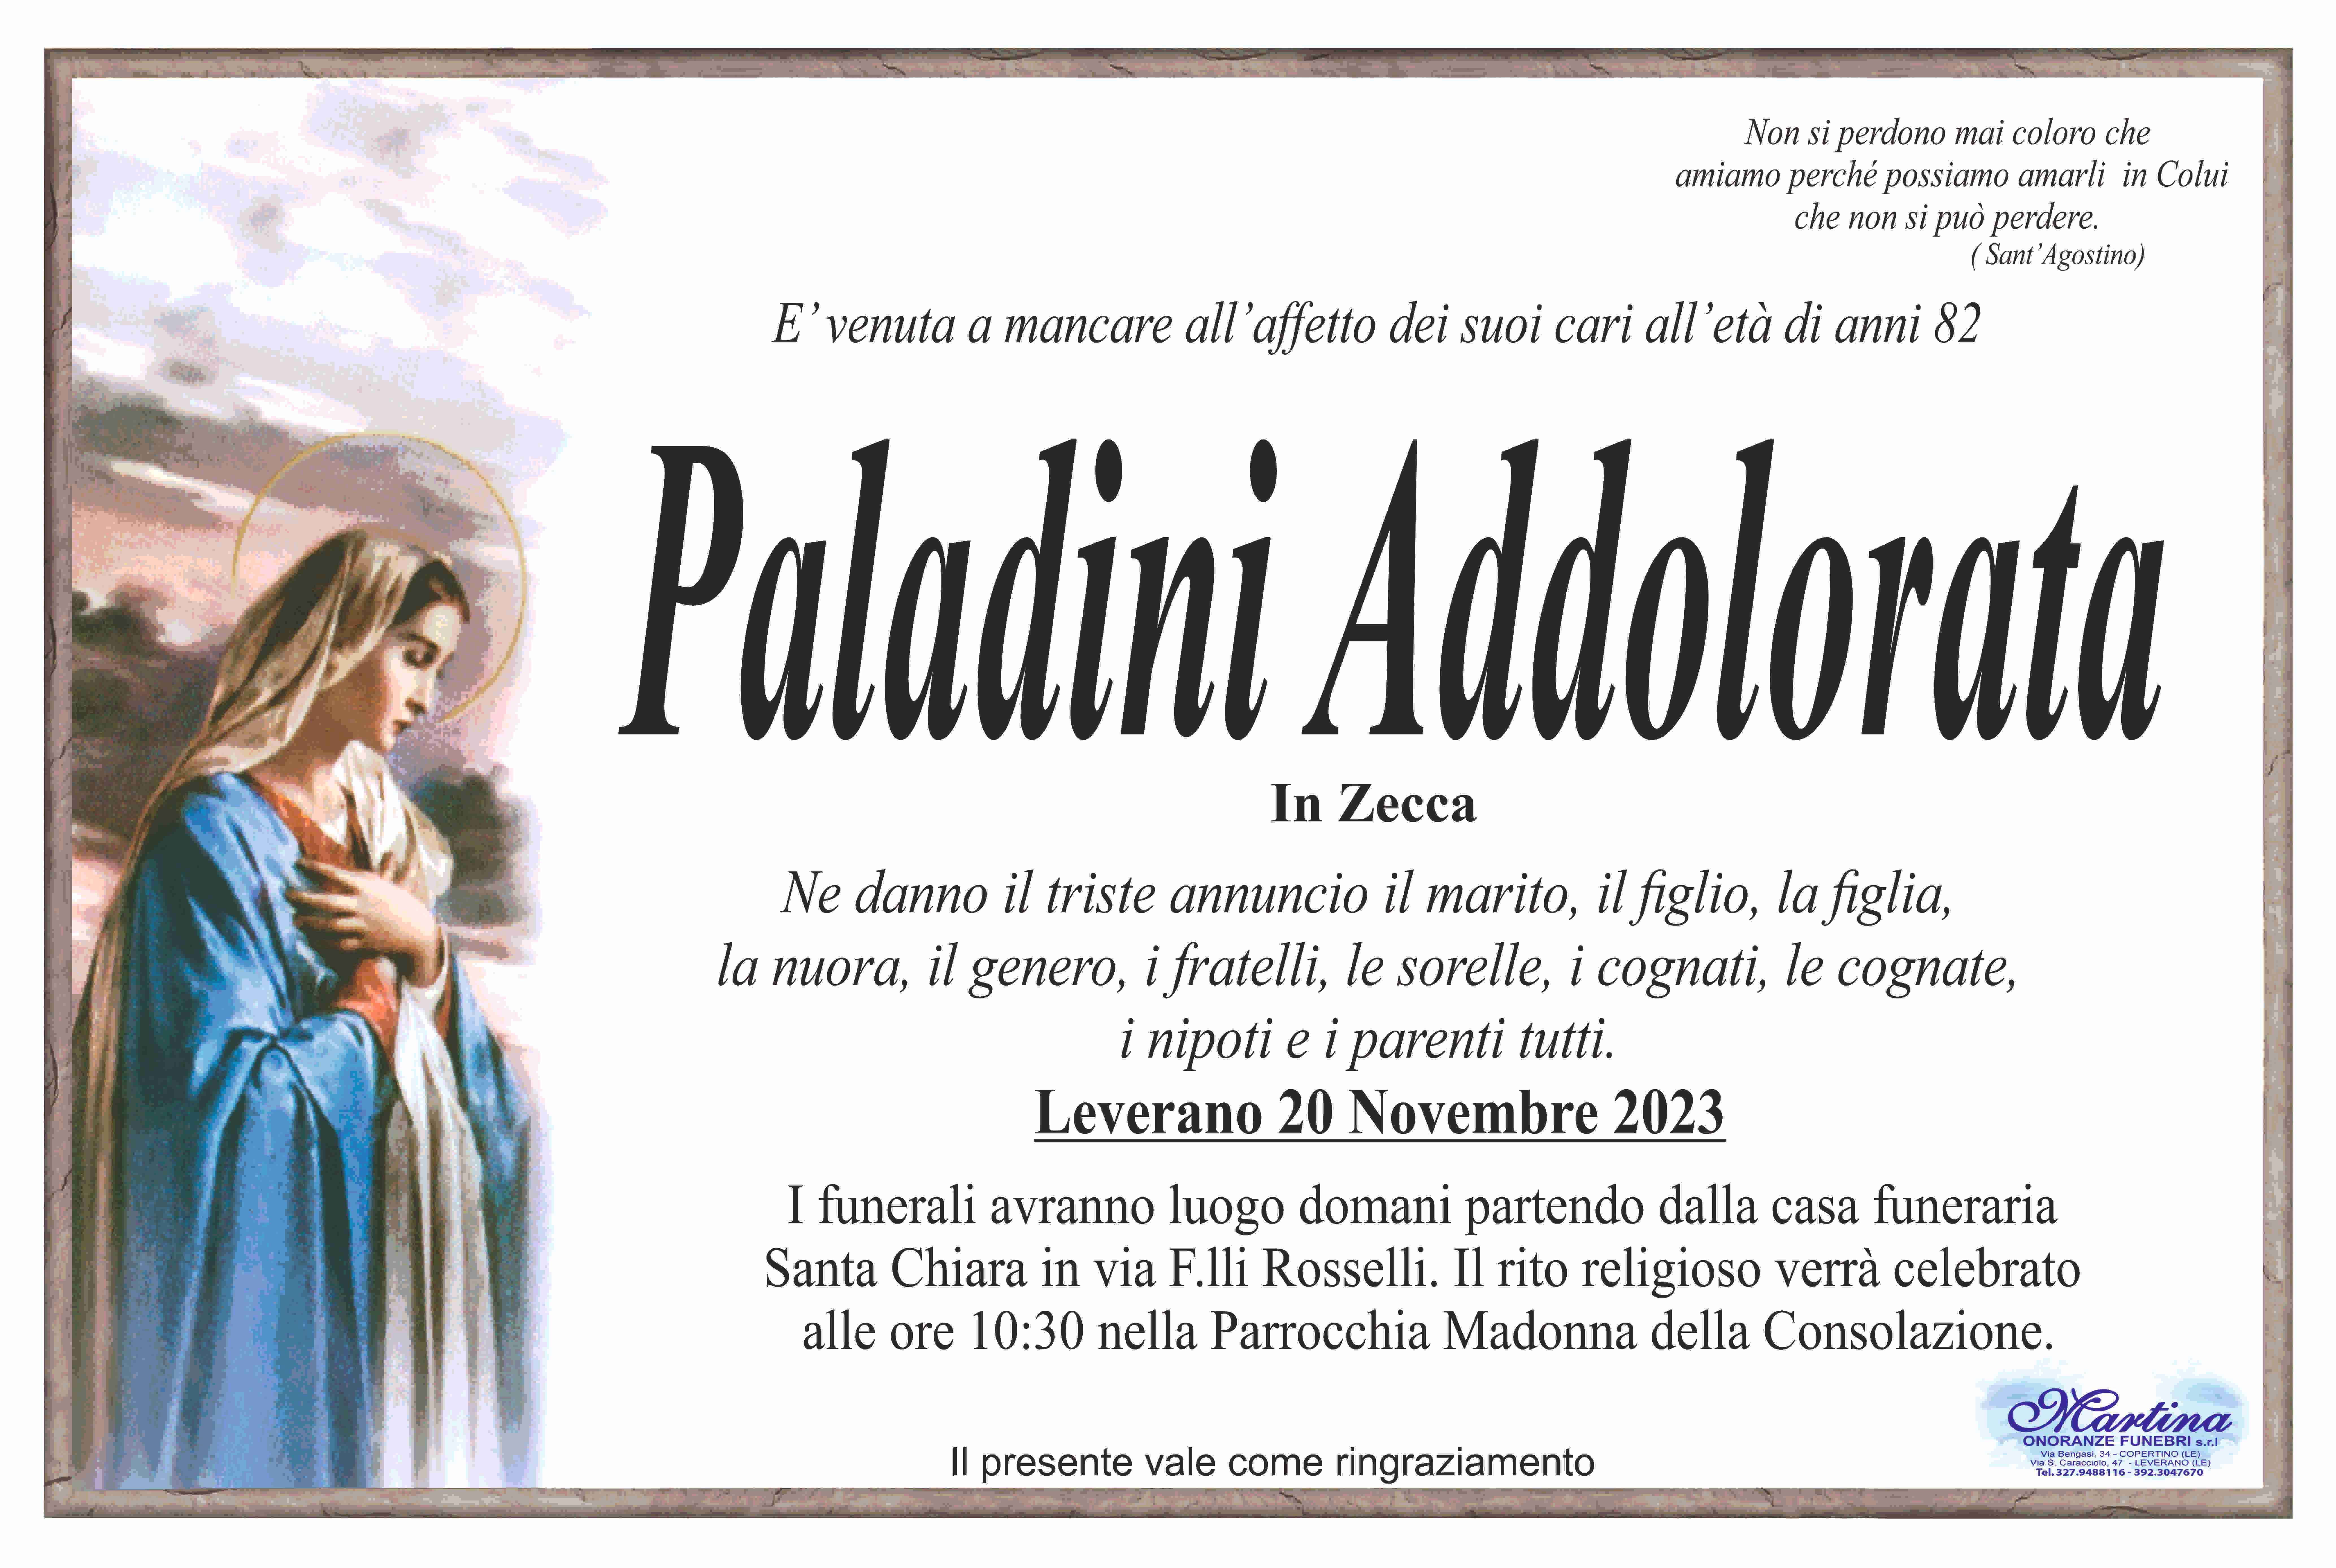 Addolorata Paladini